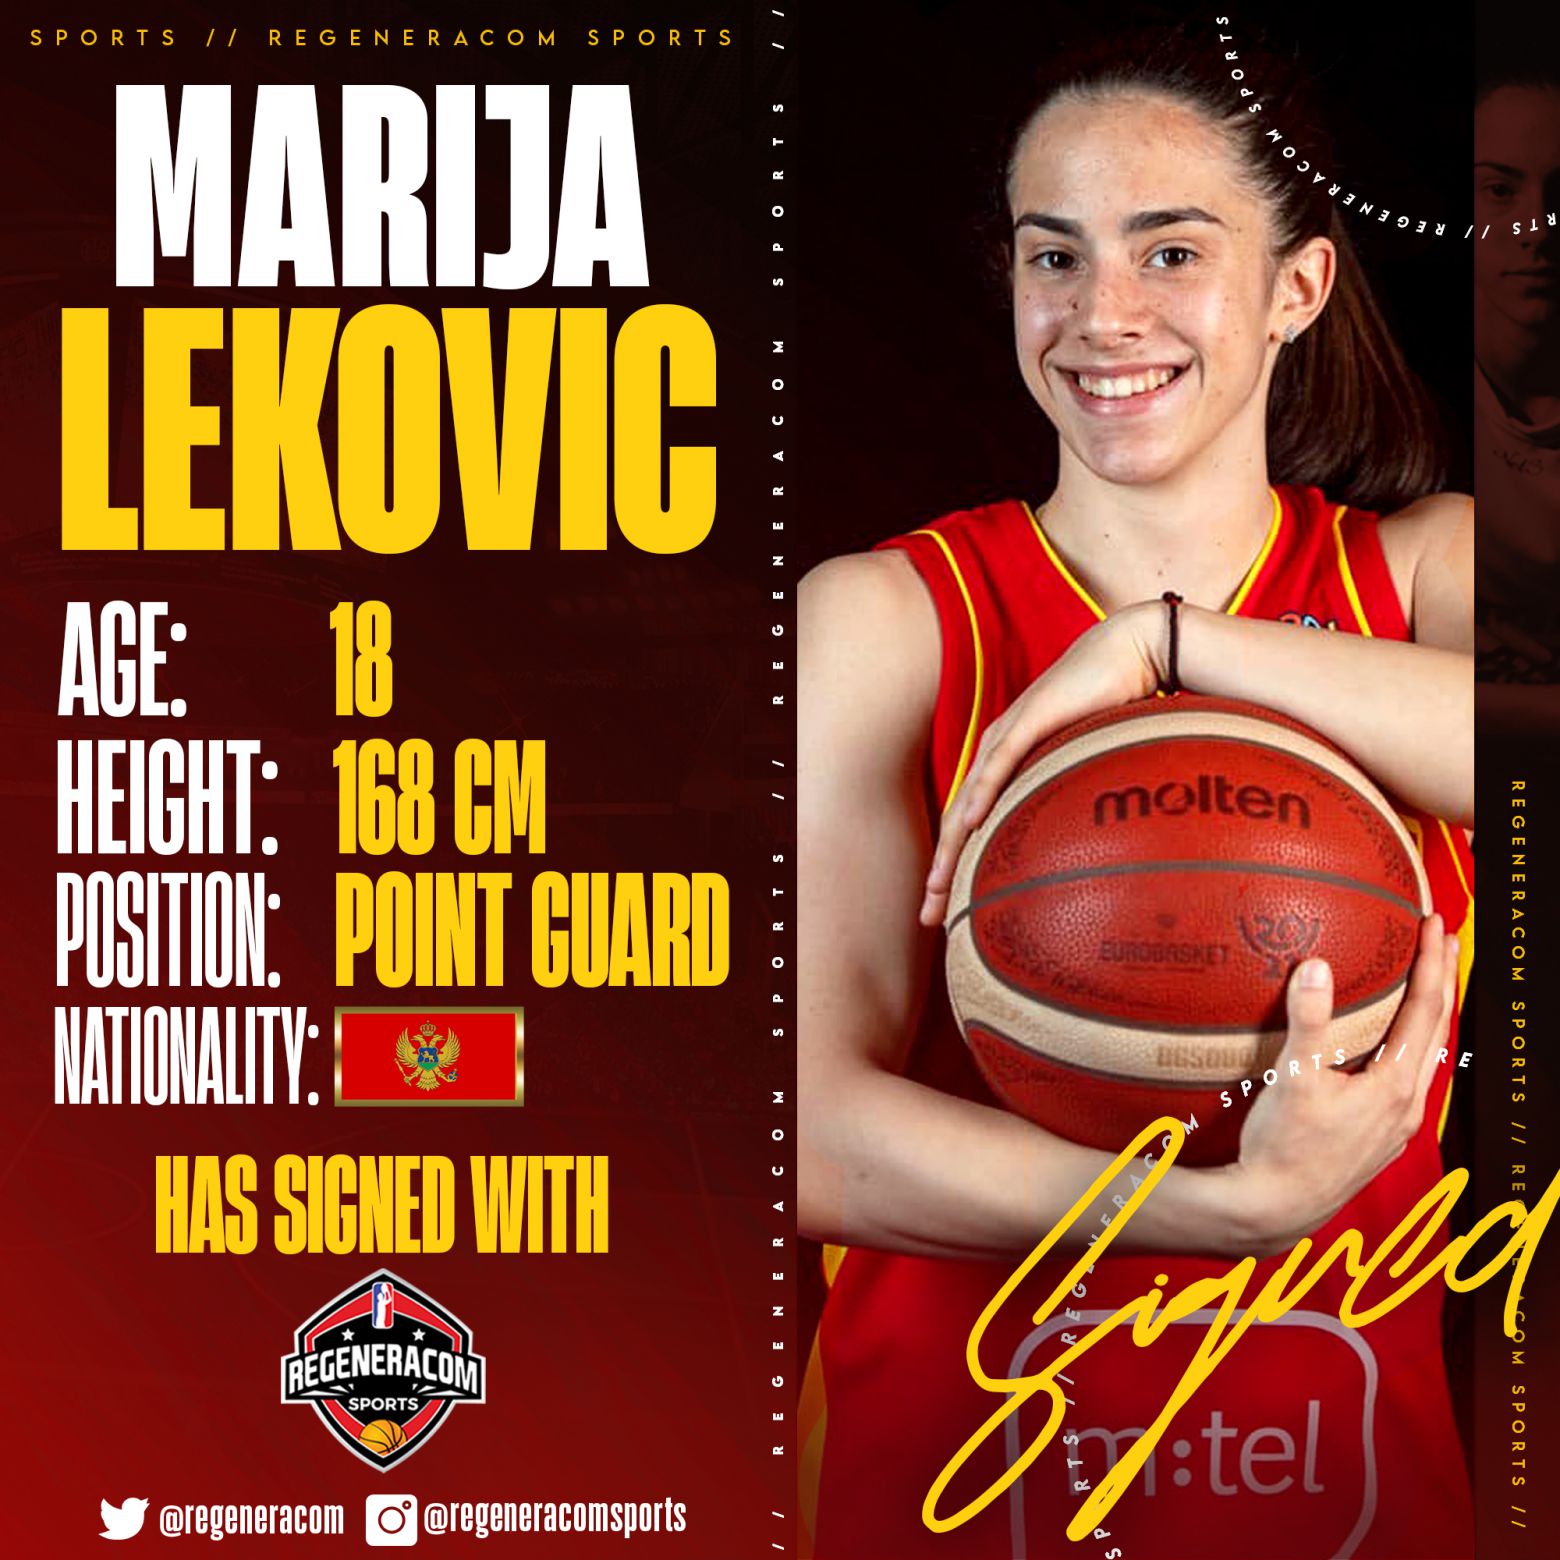 MARIJA LEKOVIC has signed with Regeneracom Sports